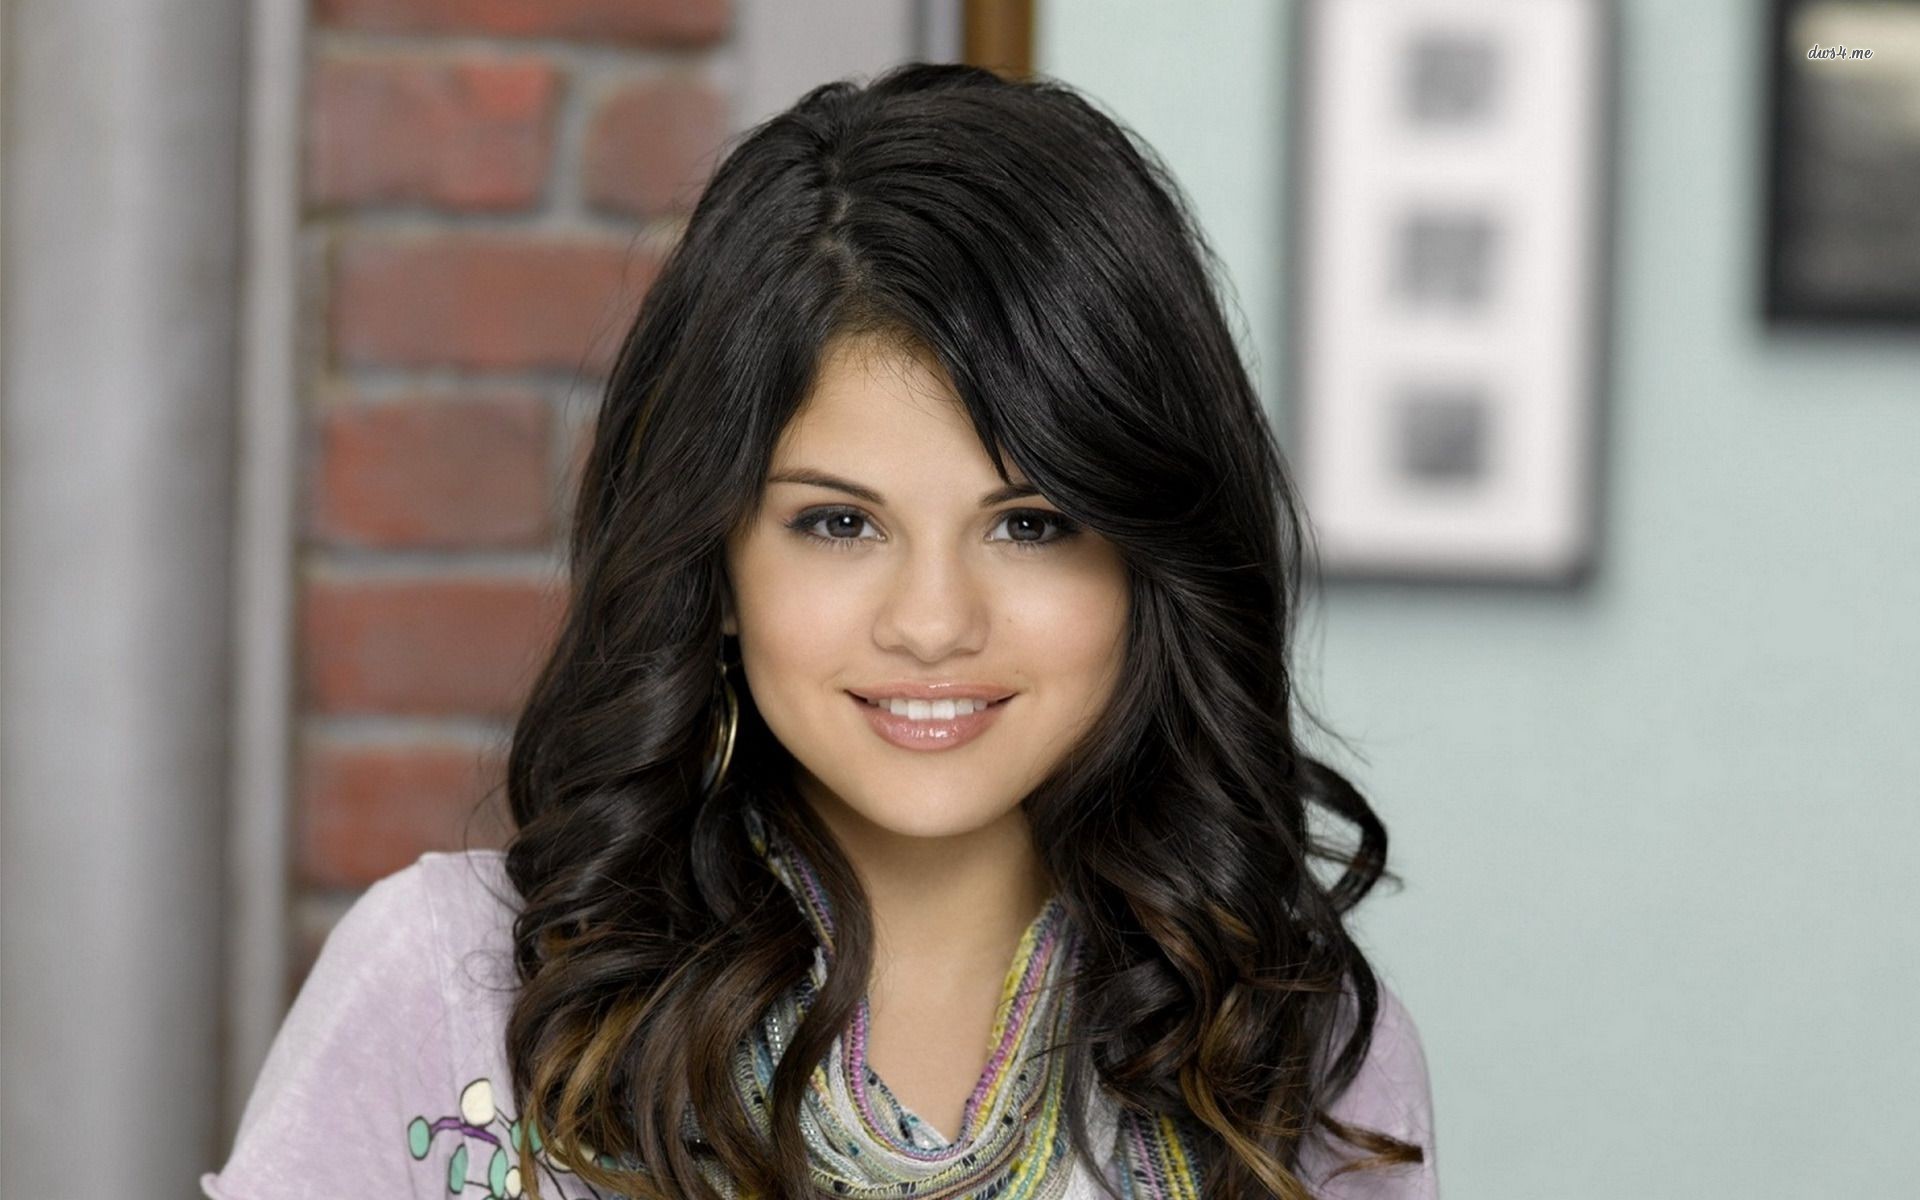 Selena Gomez Cute Celebrity Wallpapers - HD Wallpapers